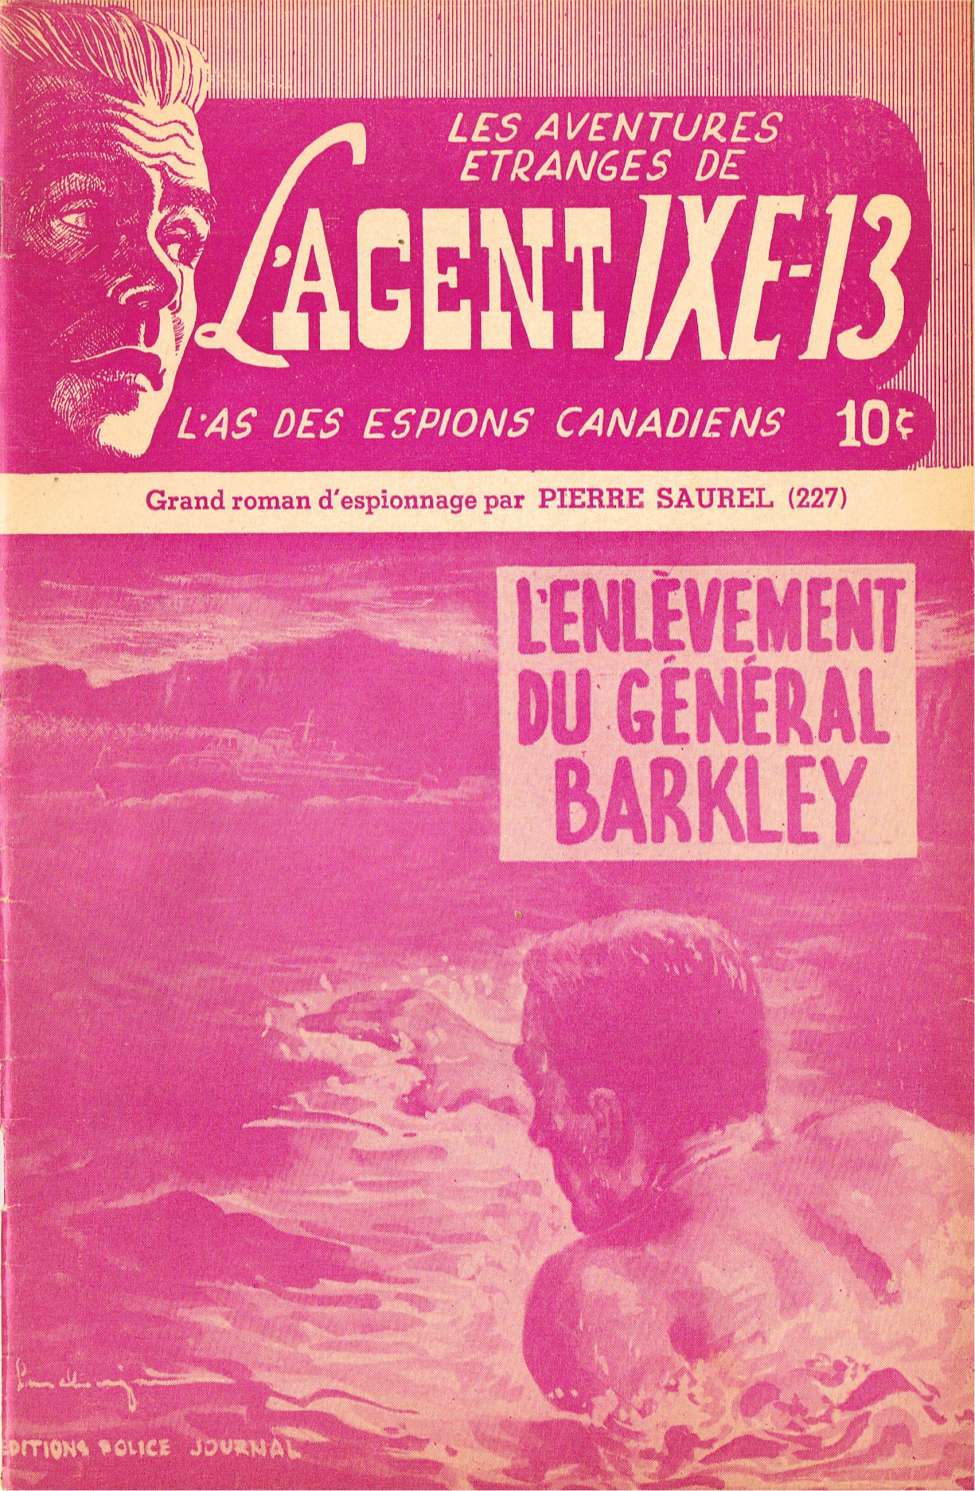 Book Cover For L'Agent IXE-13 v2 227 - L'enlèvement du général barkley